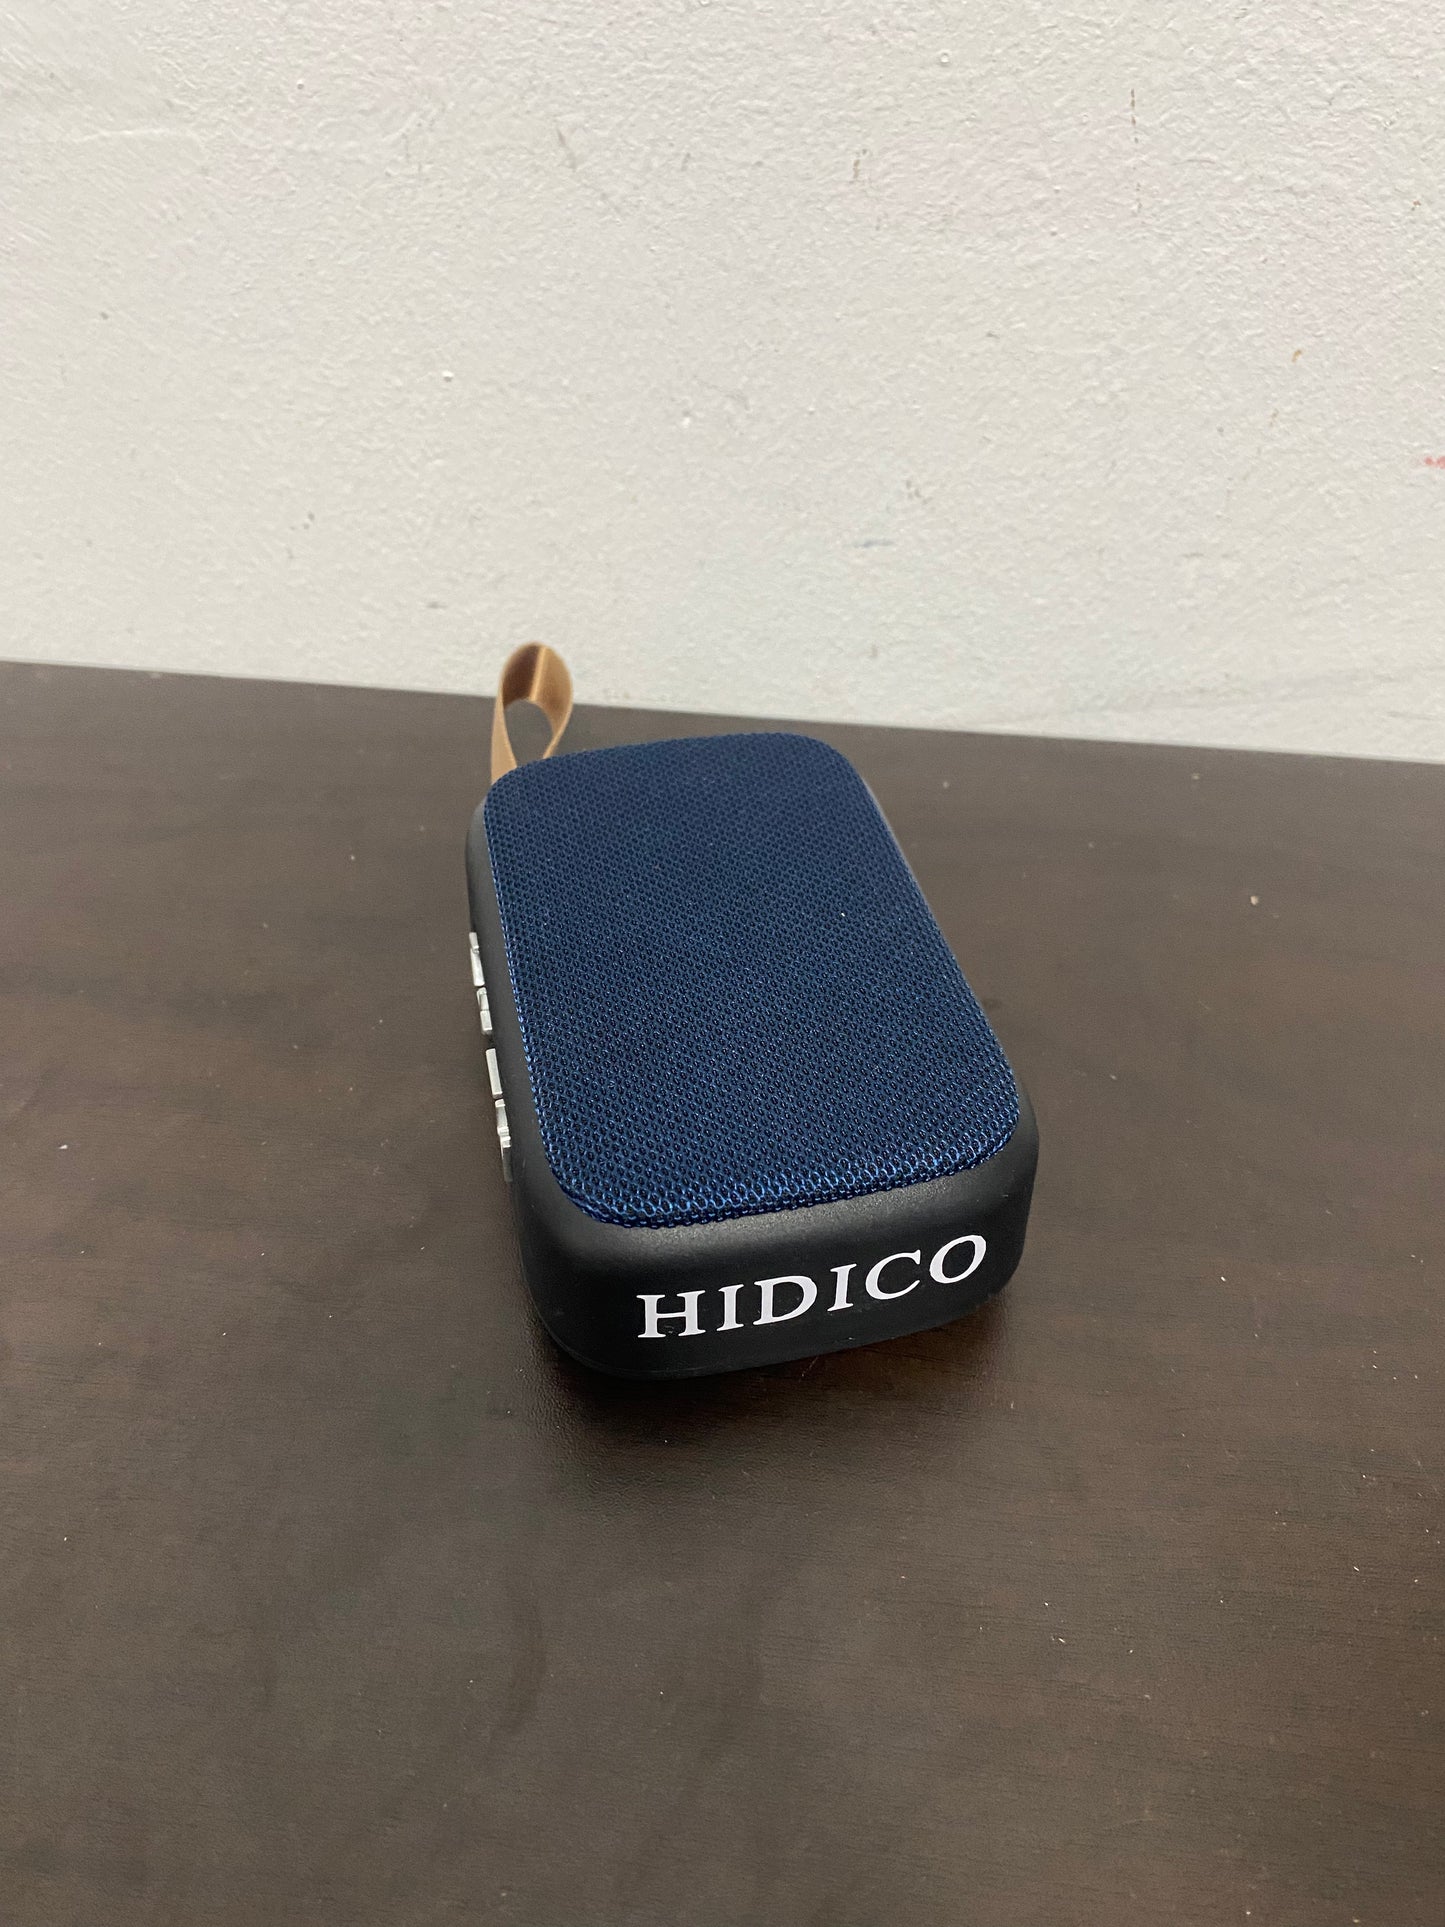 HIDICO Audio Speaker for Outdoor